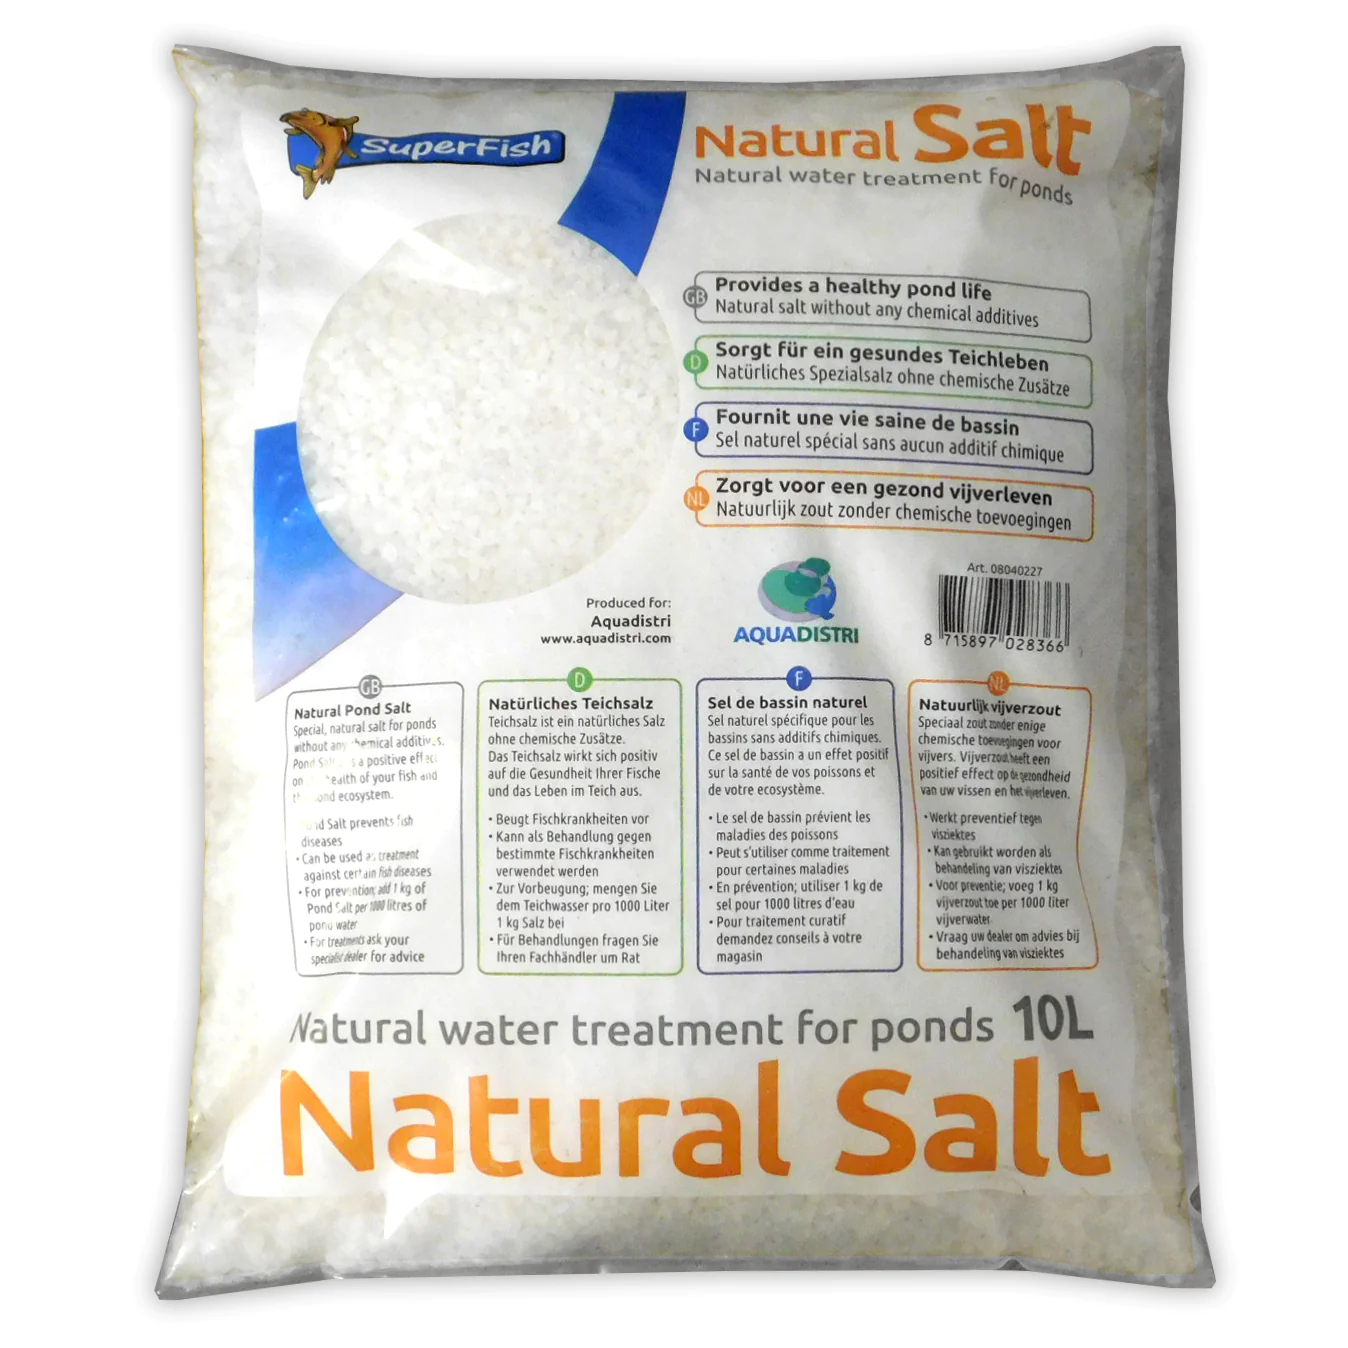 Superfish Natural salt